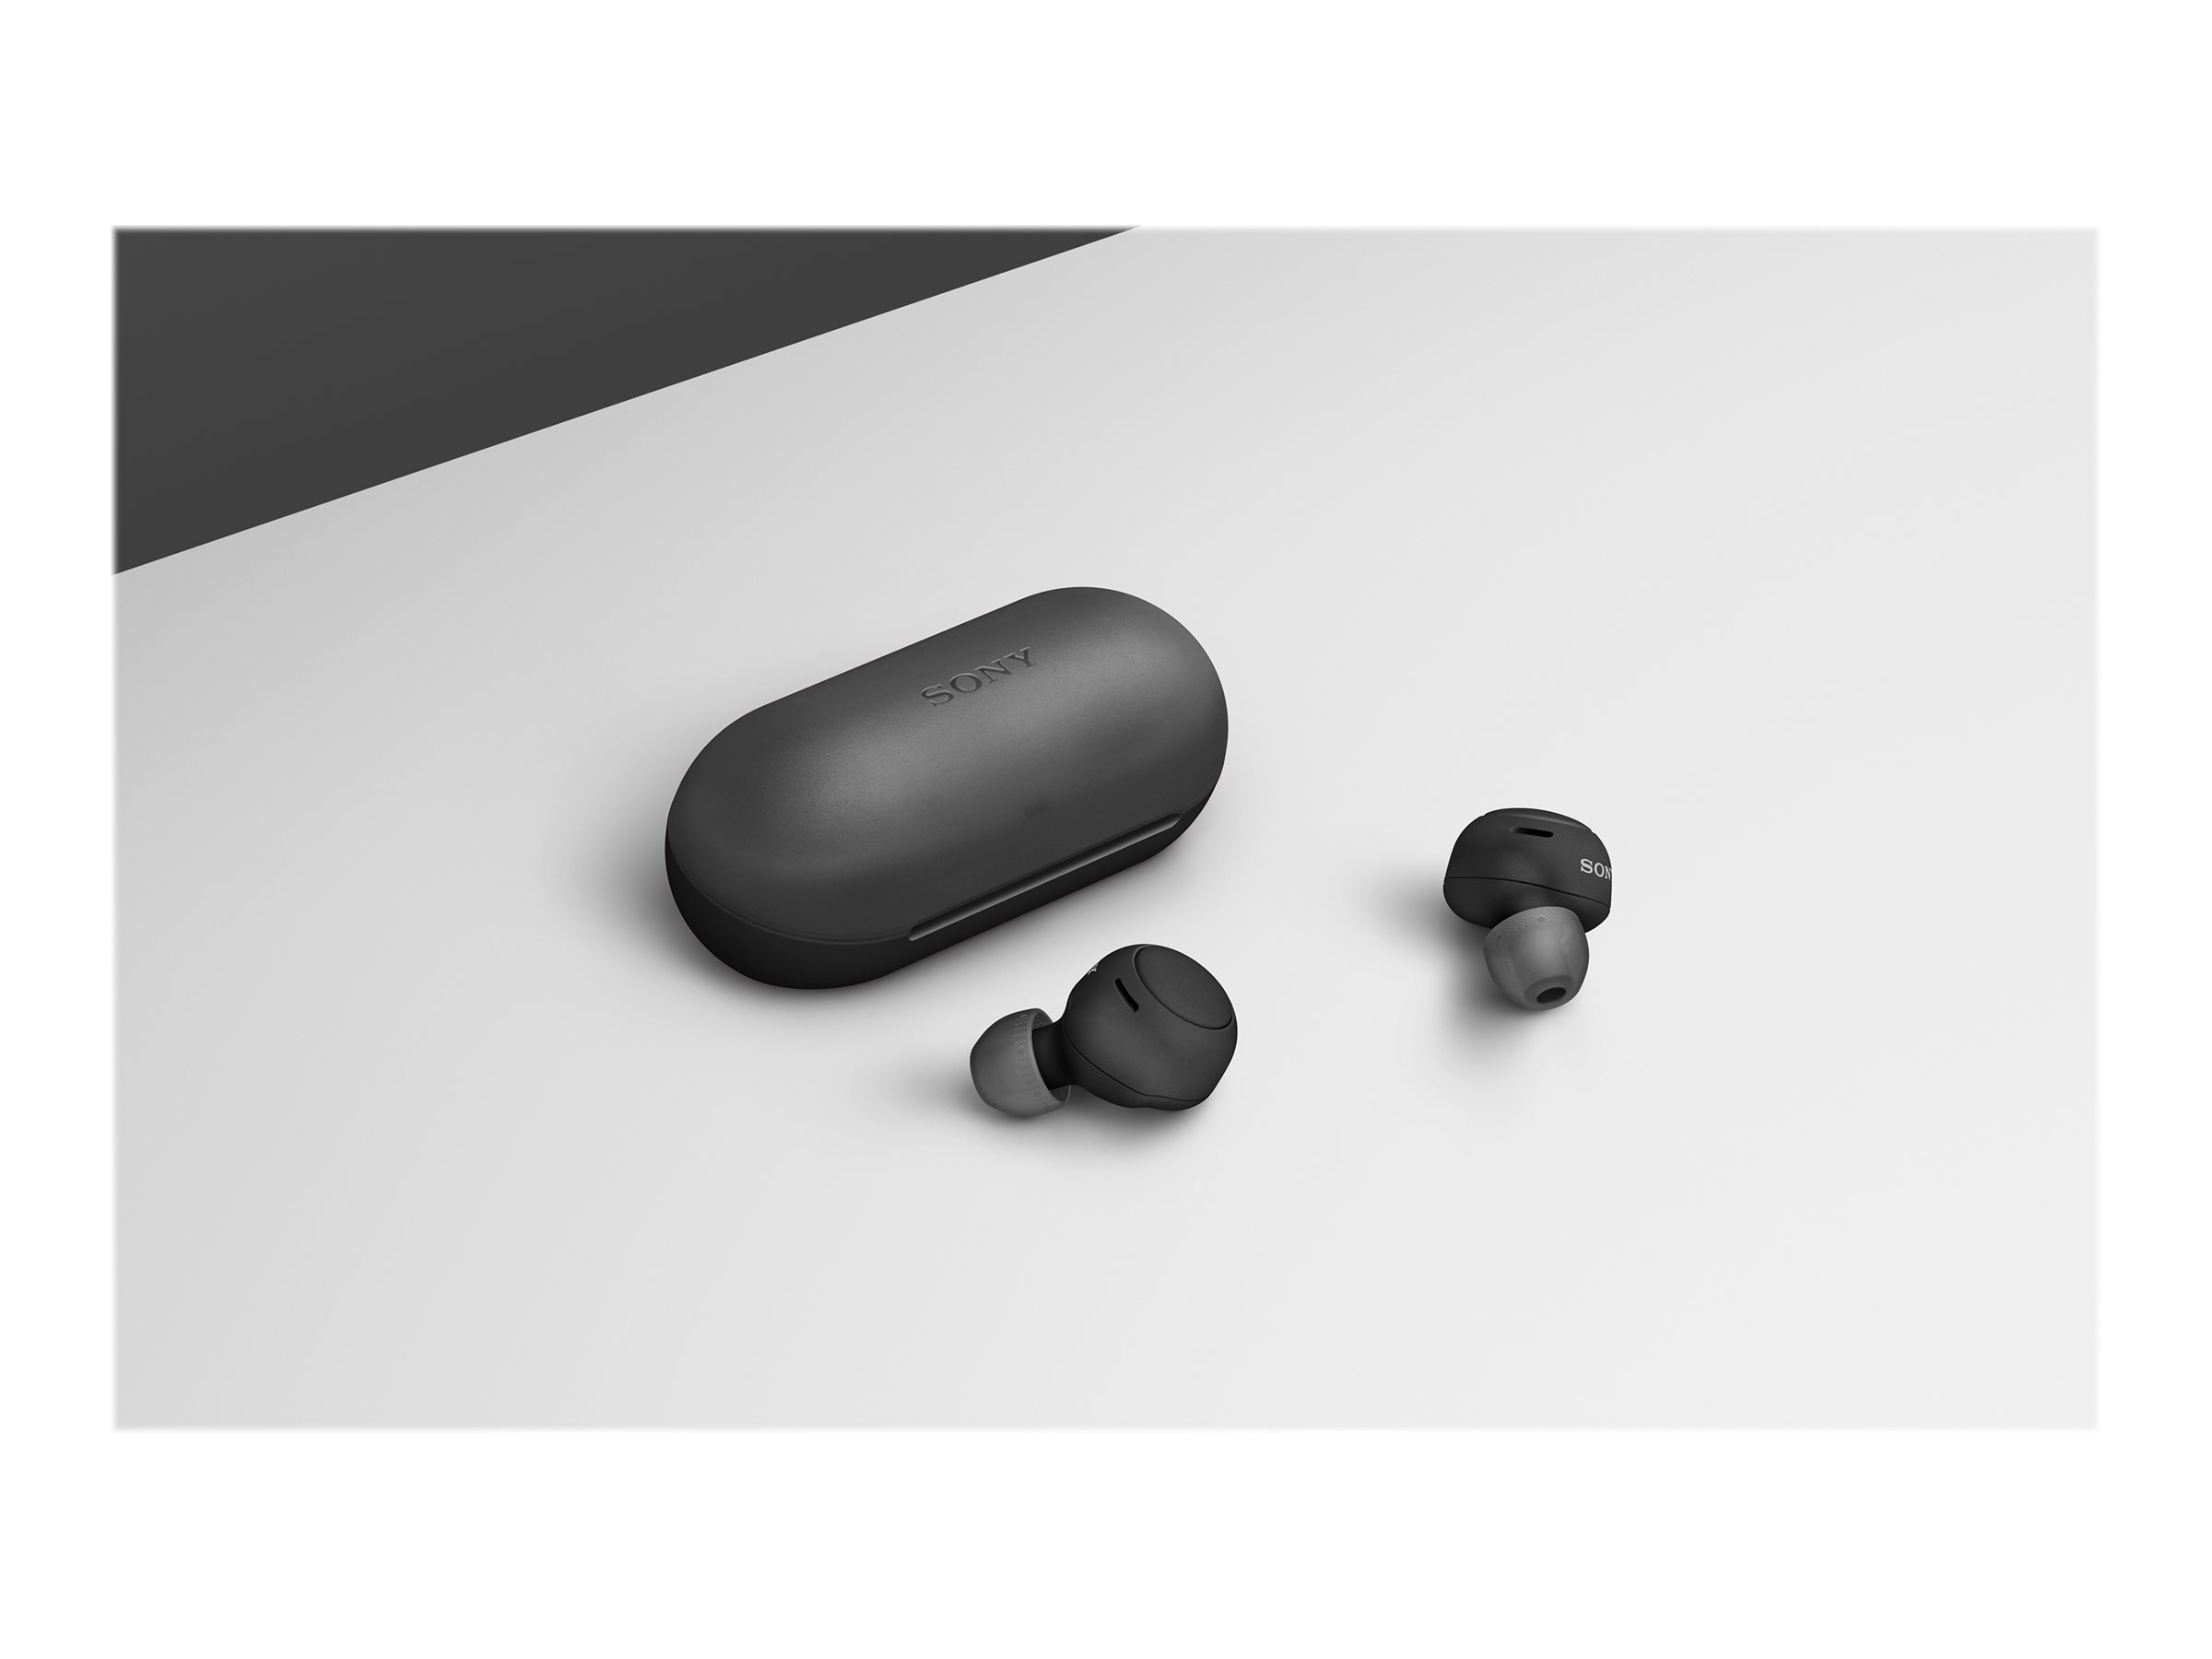 Sony WF-C500 Truly Wireless In-Ear Bluetooth Earbud Headphones - Coral